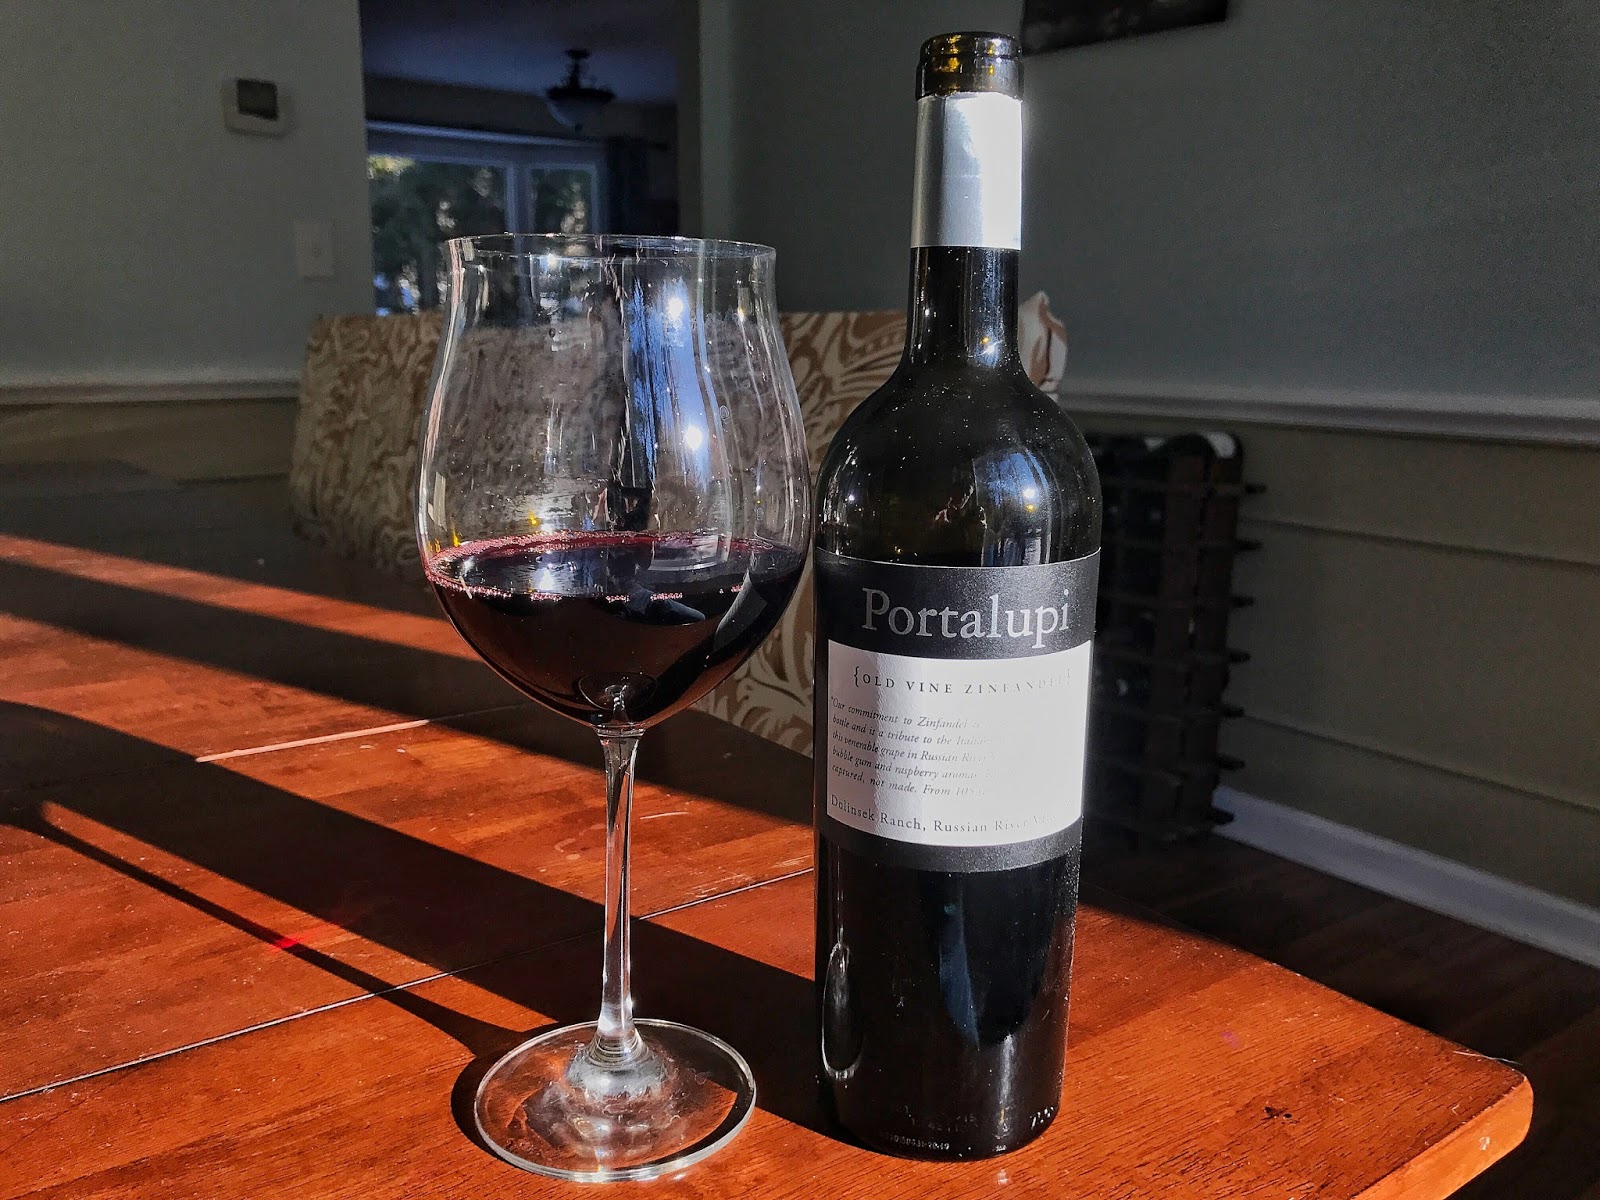 Portalupi Bottle and Wine Glass